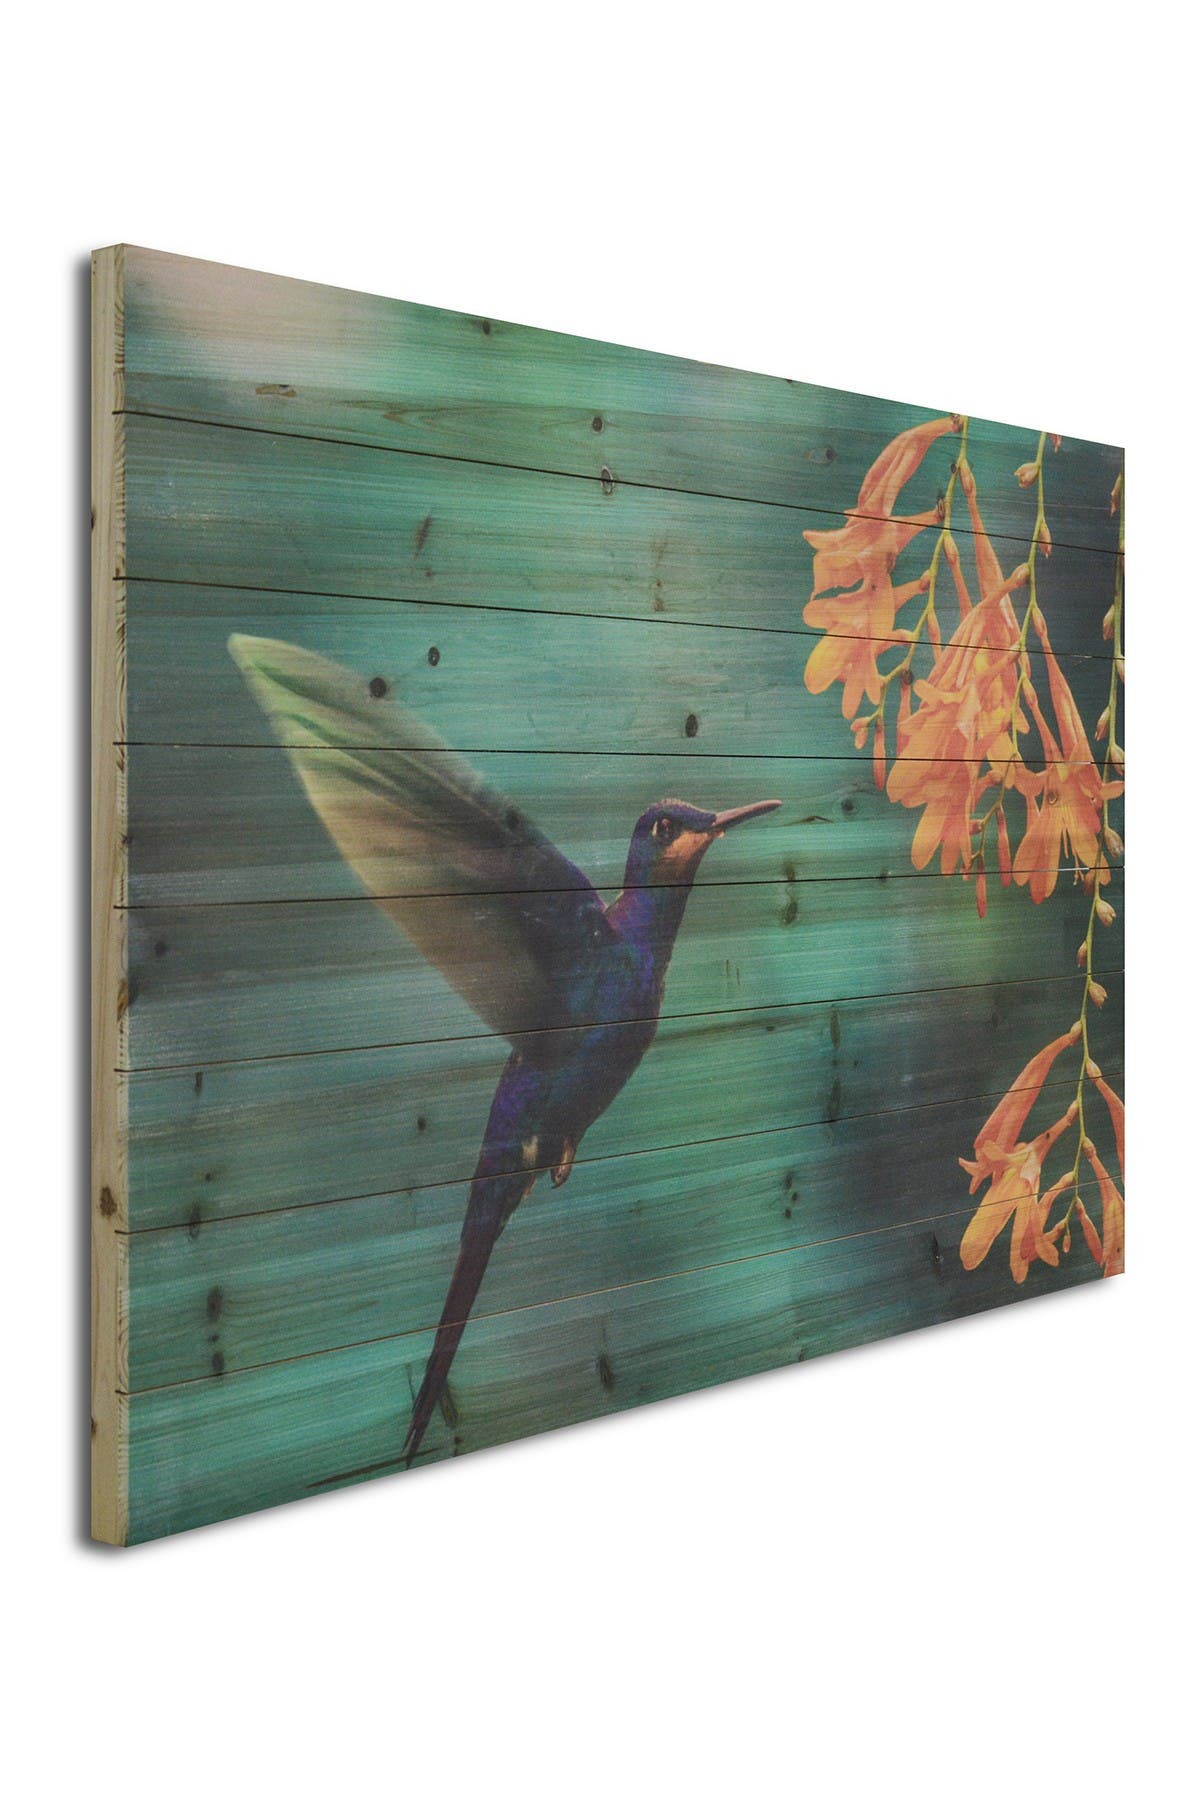 Gallery 57 Hummingbird Wooden Wall Art In Turquoise/aqua